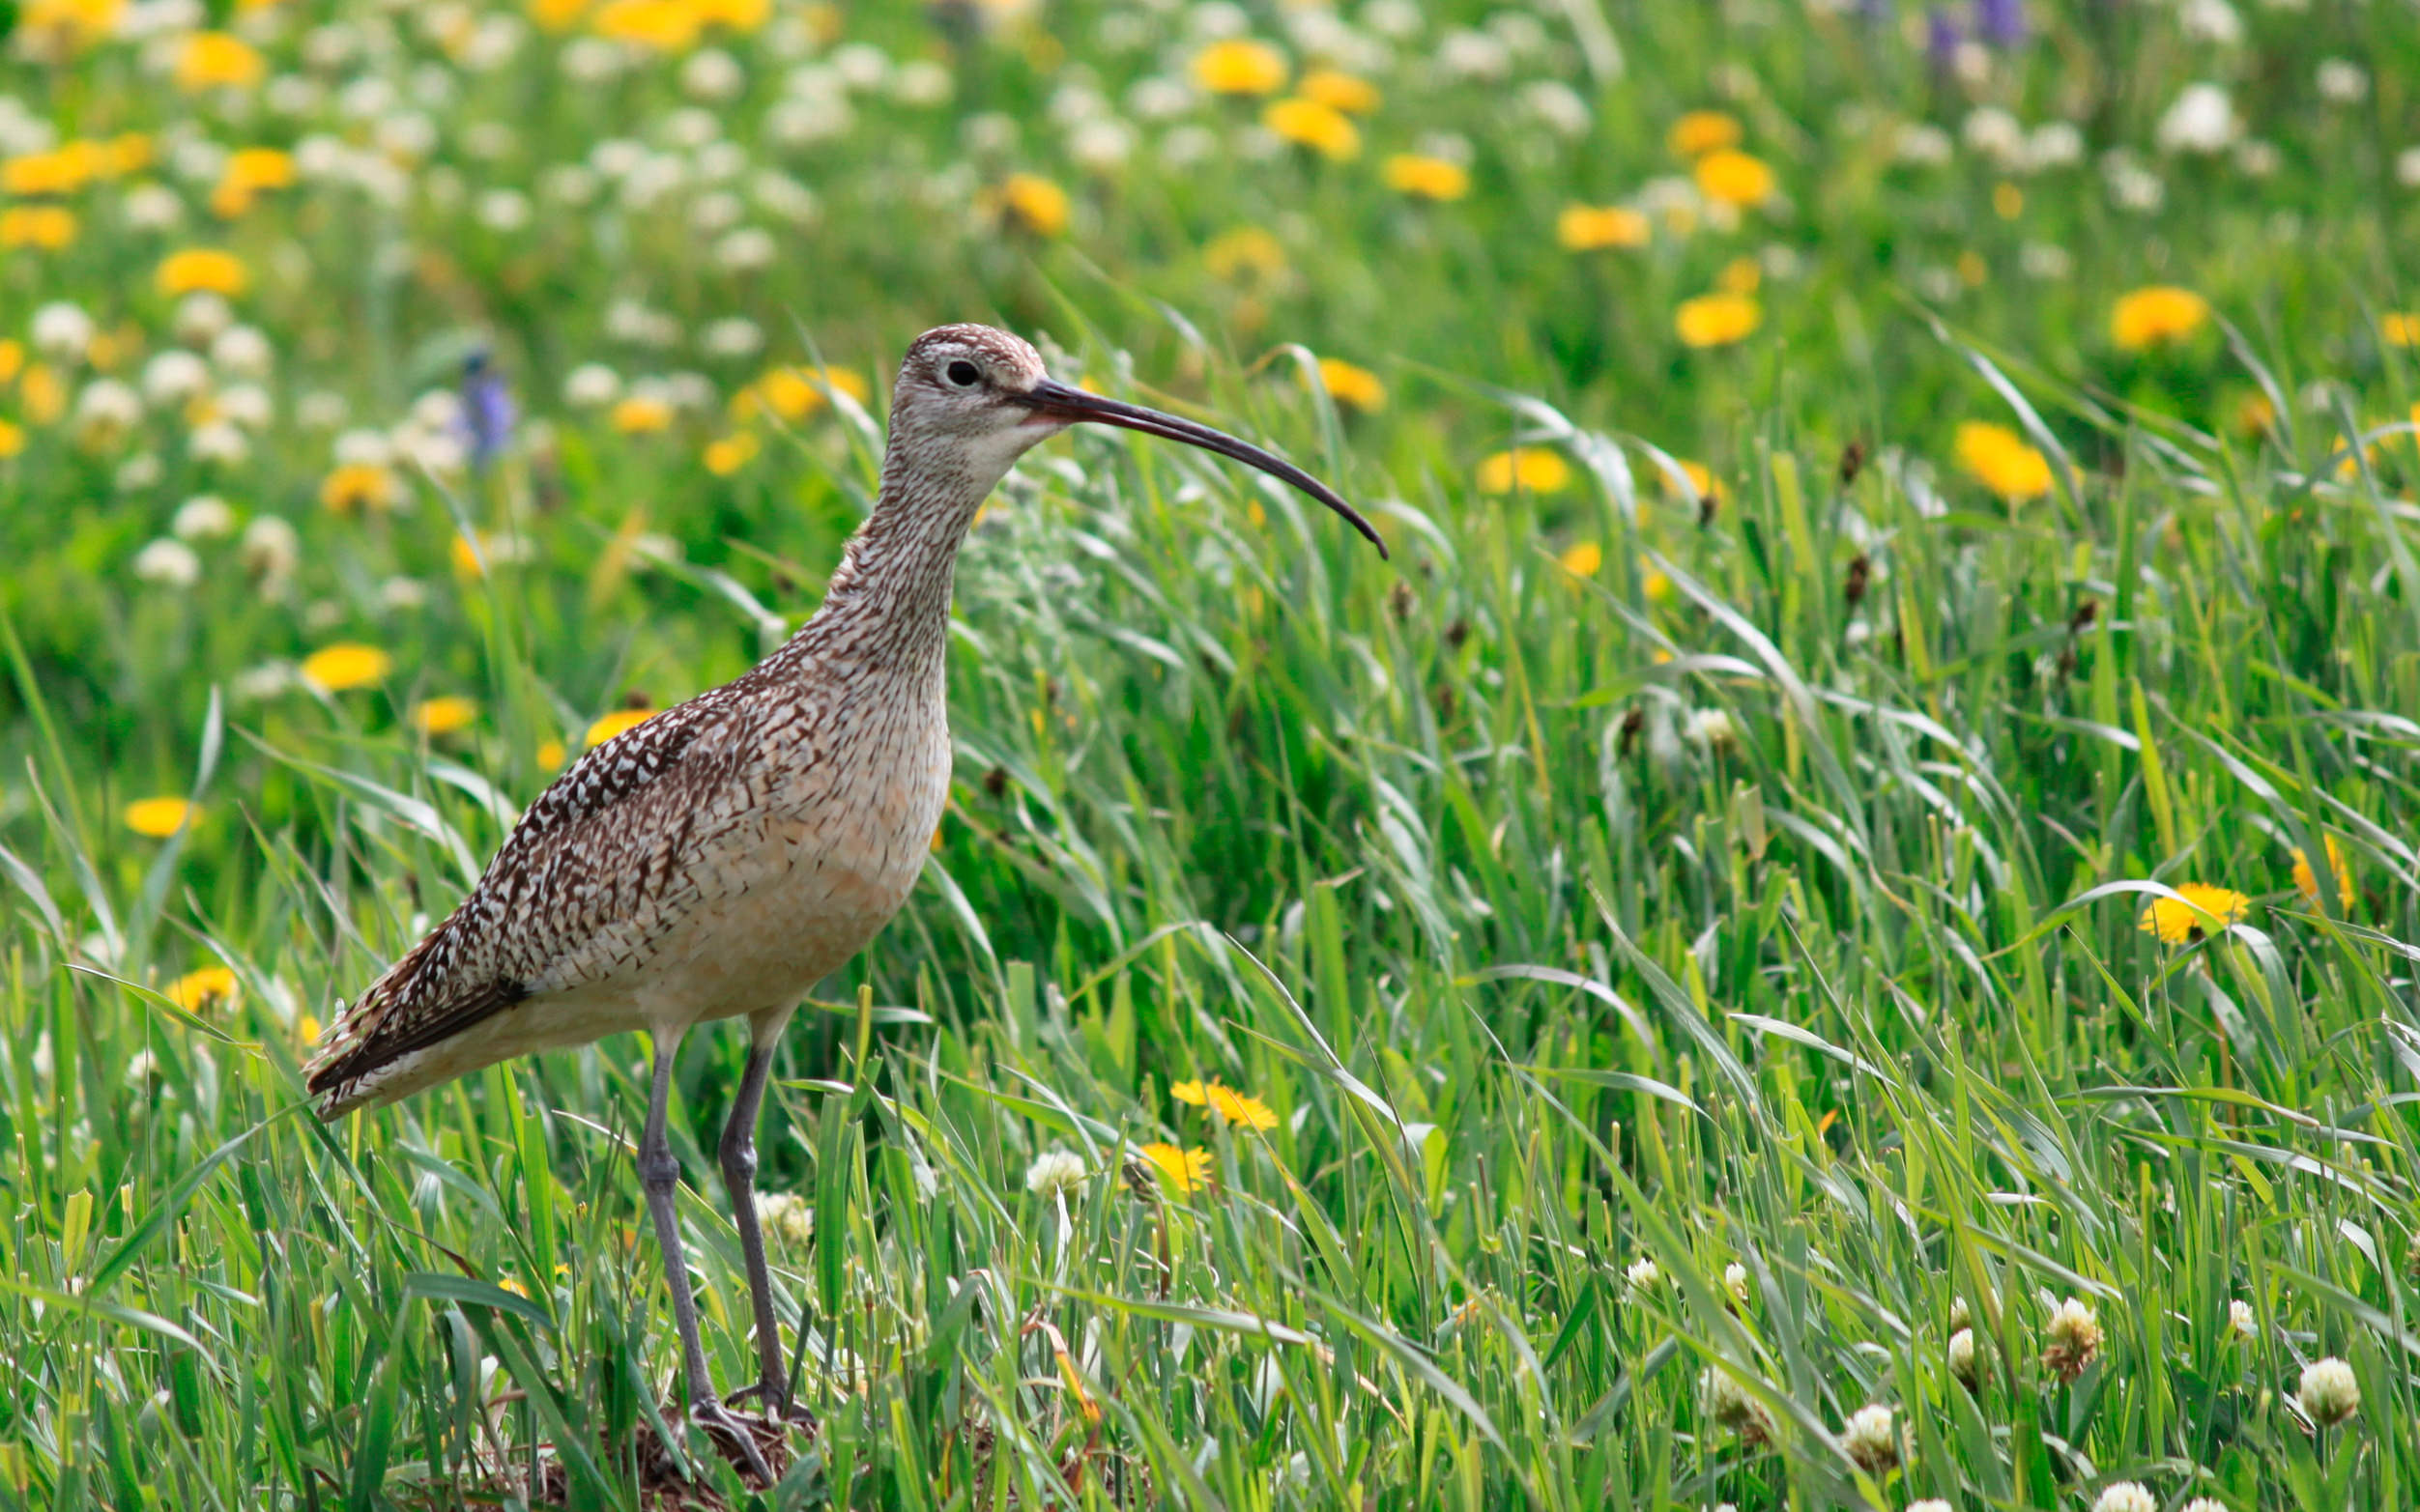 Bird with long beak walks through tall grass and wildflowers.